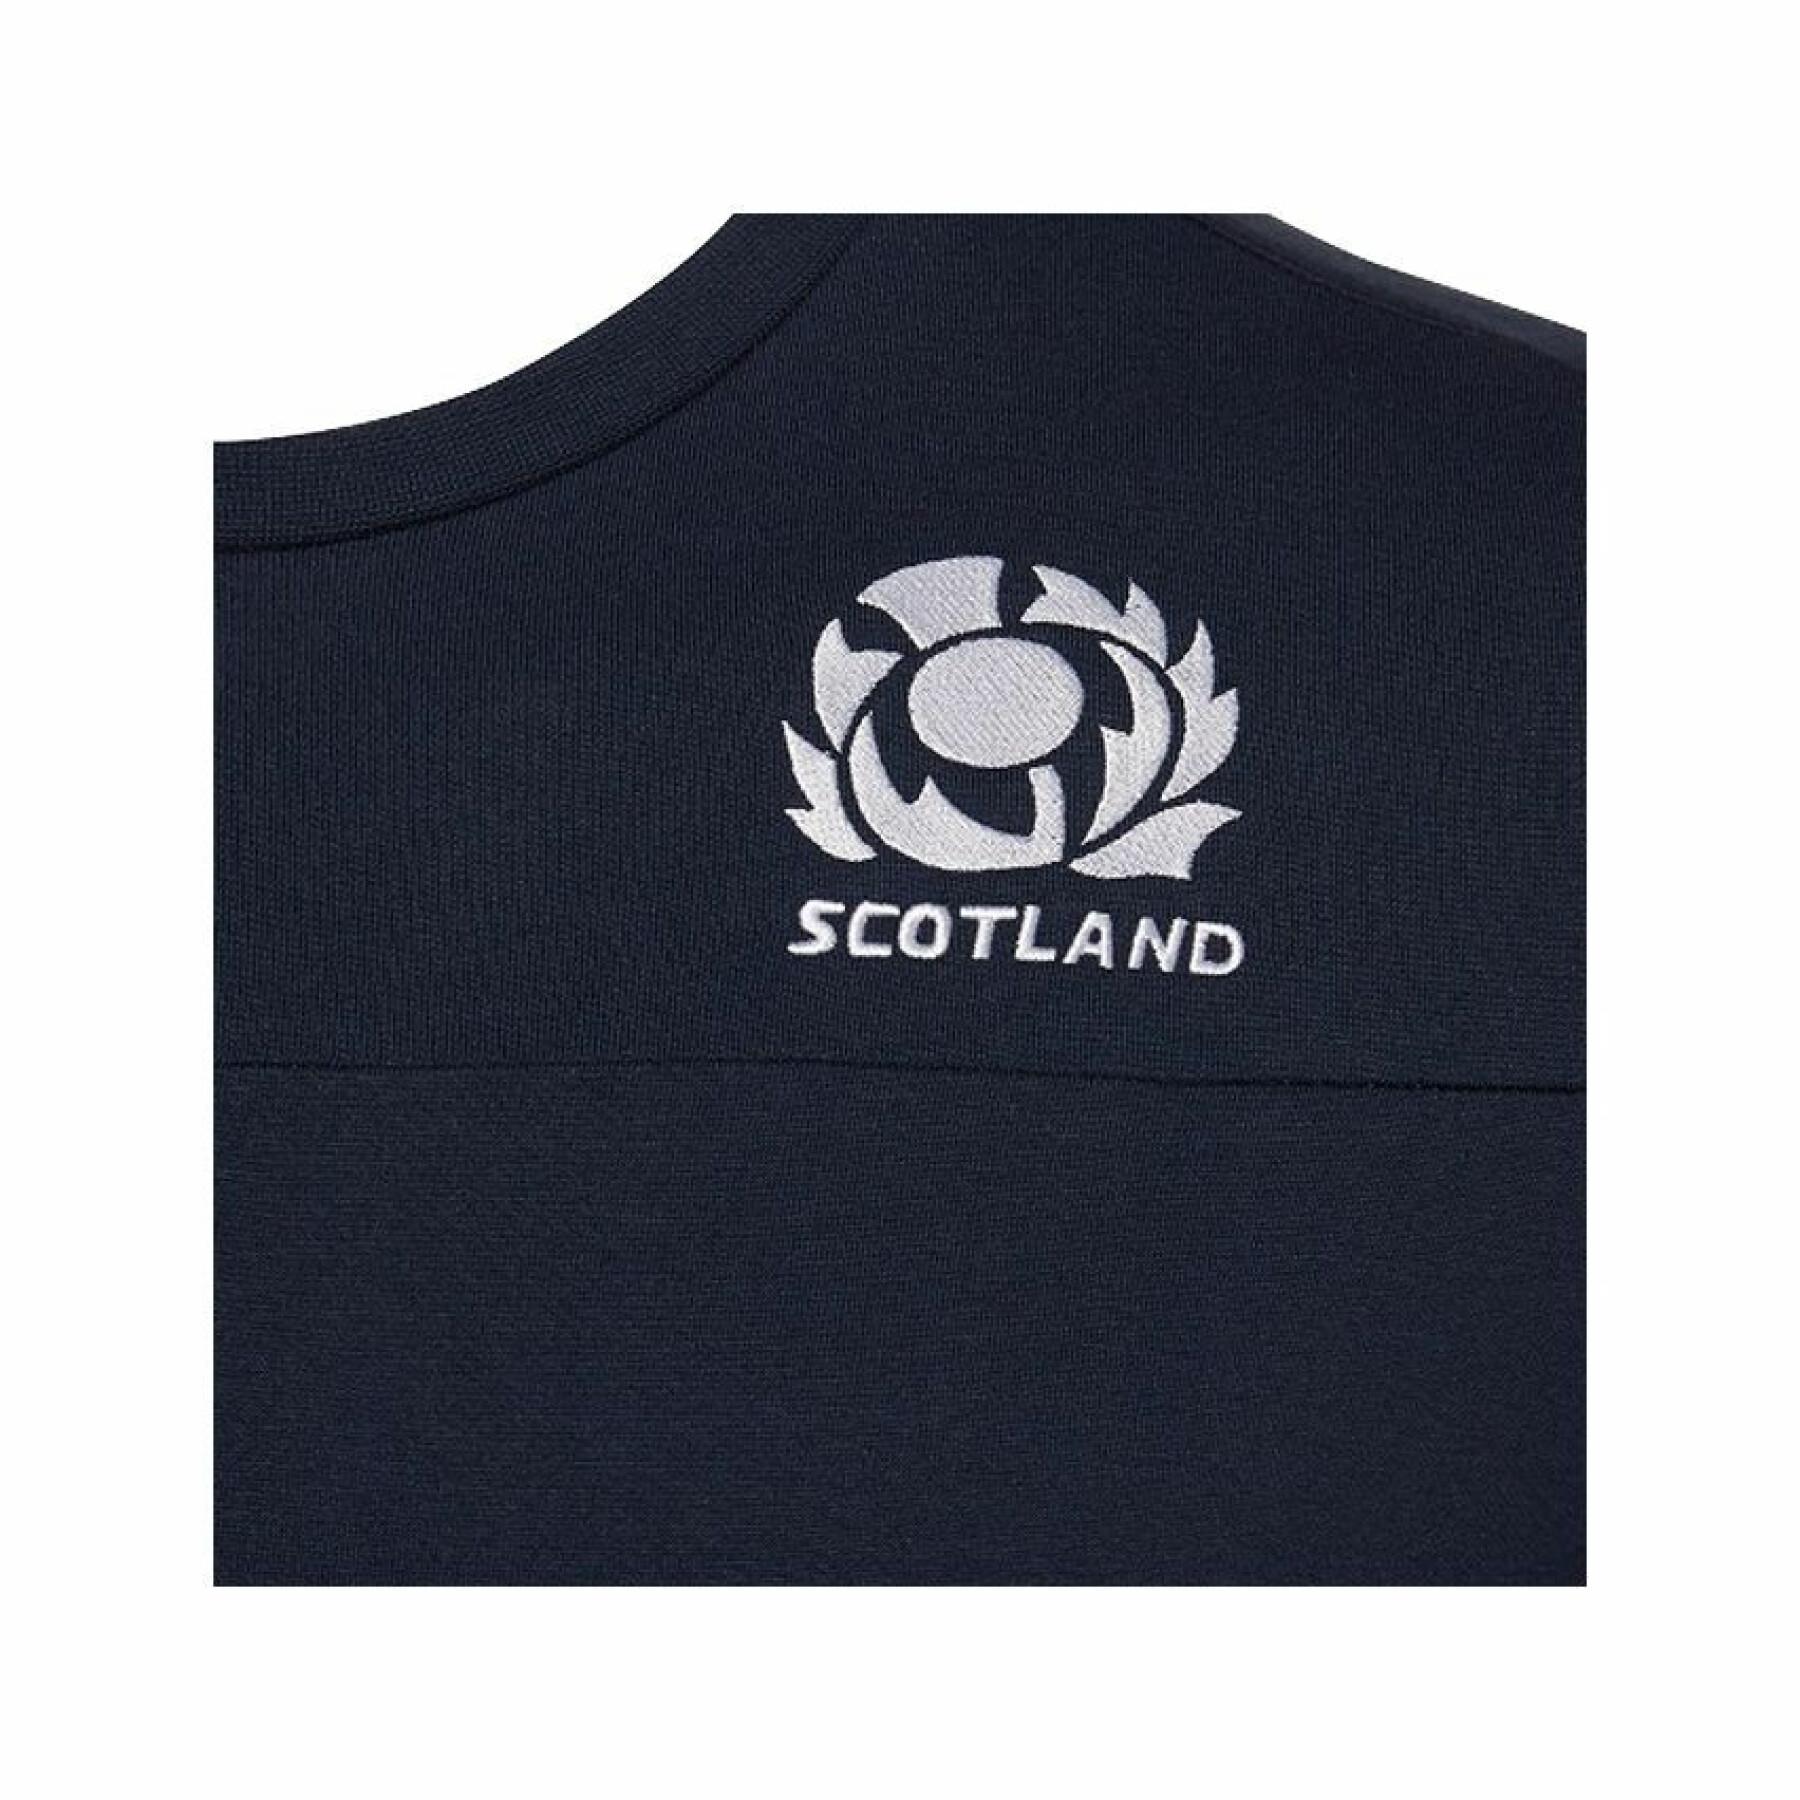 Camiseta oficial de Escocia para niños 2019/20